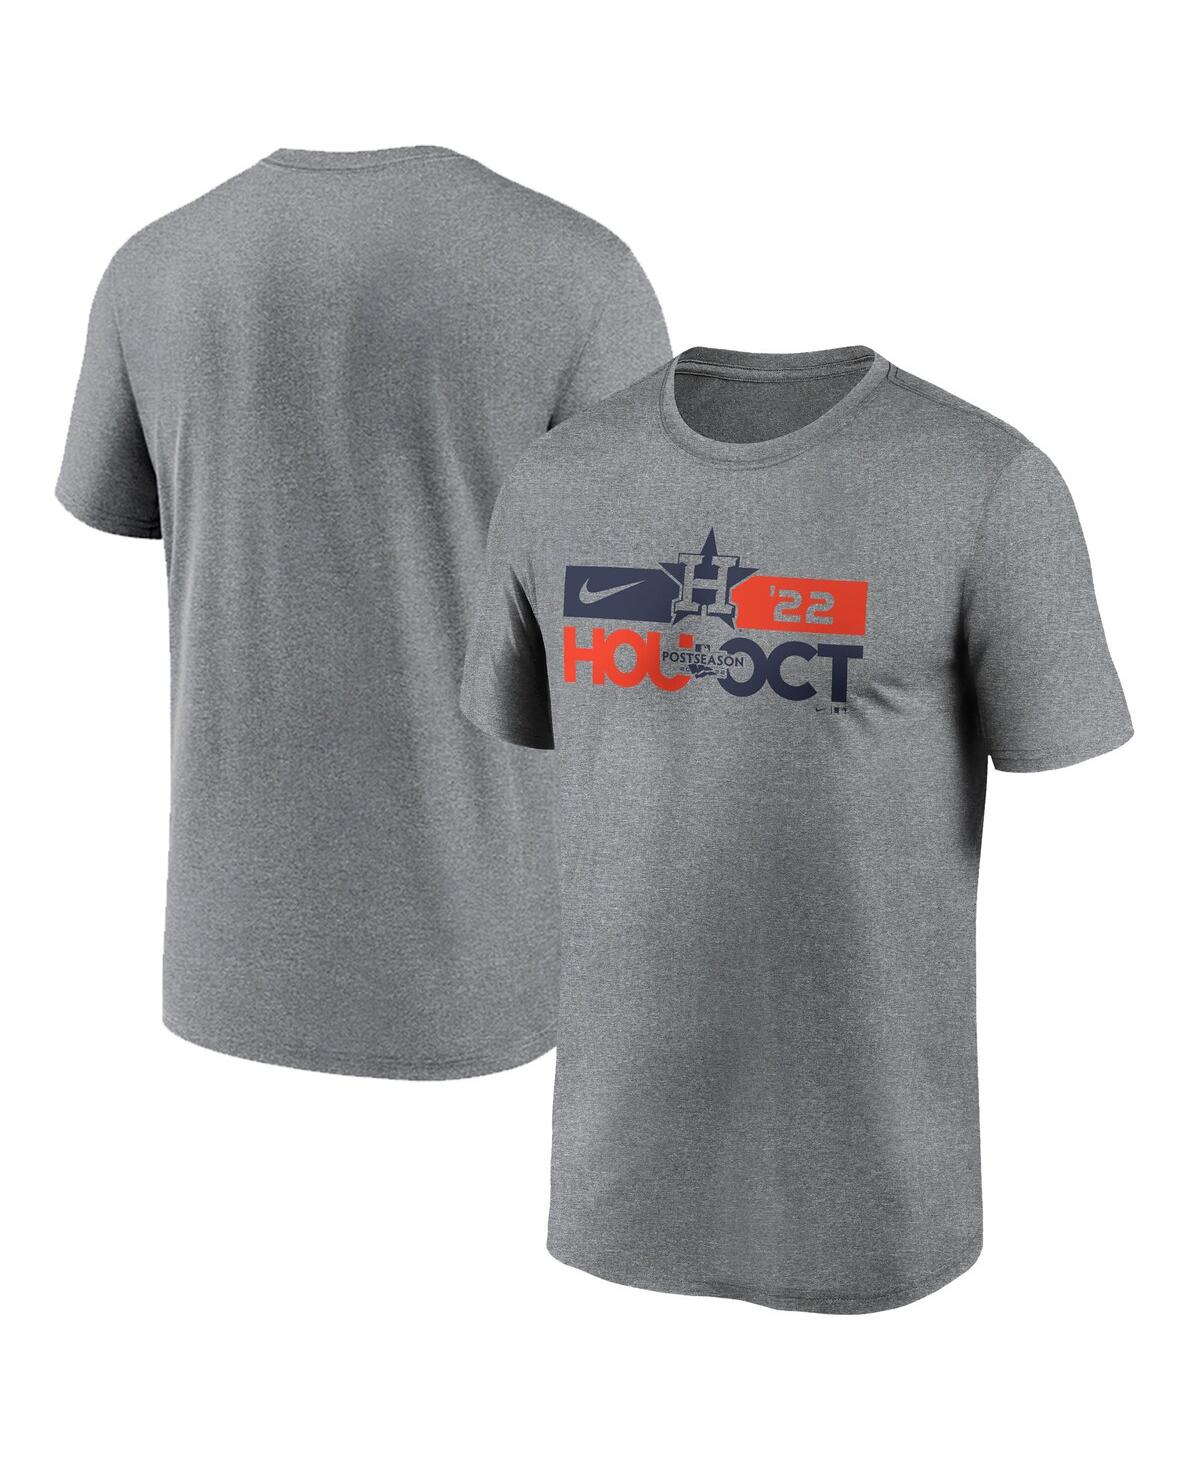 Men's Nike Heather Charcoal Houston Astros 2022 Postseason T-shirt